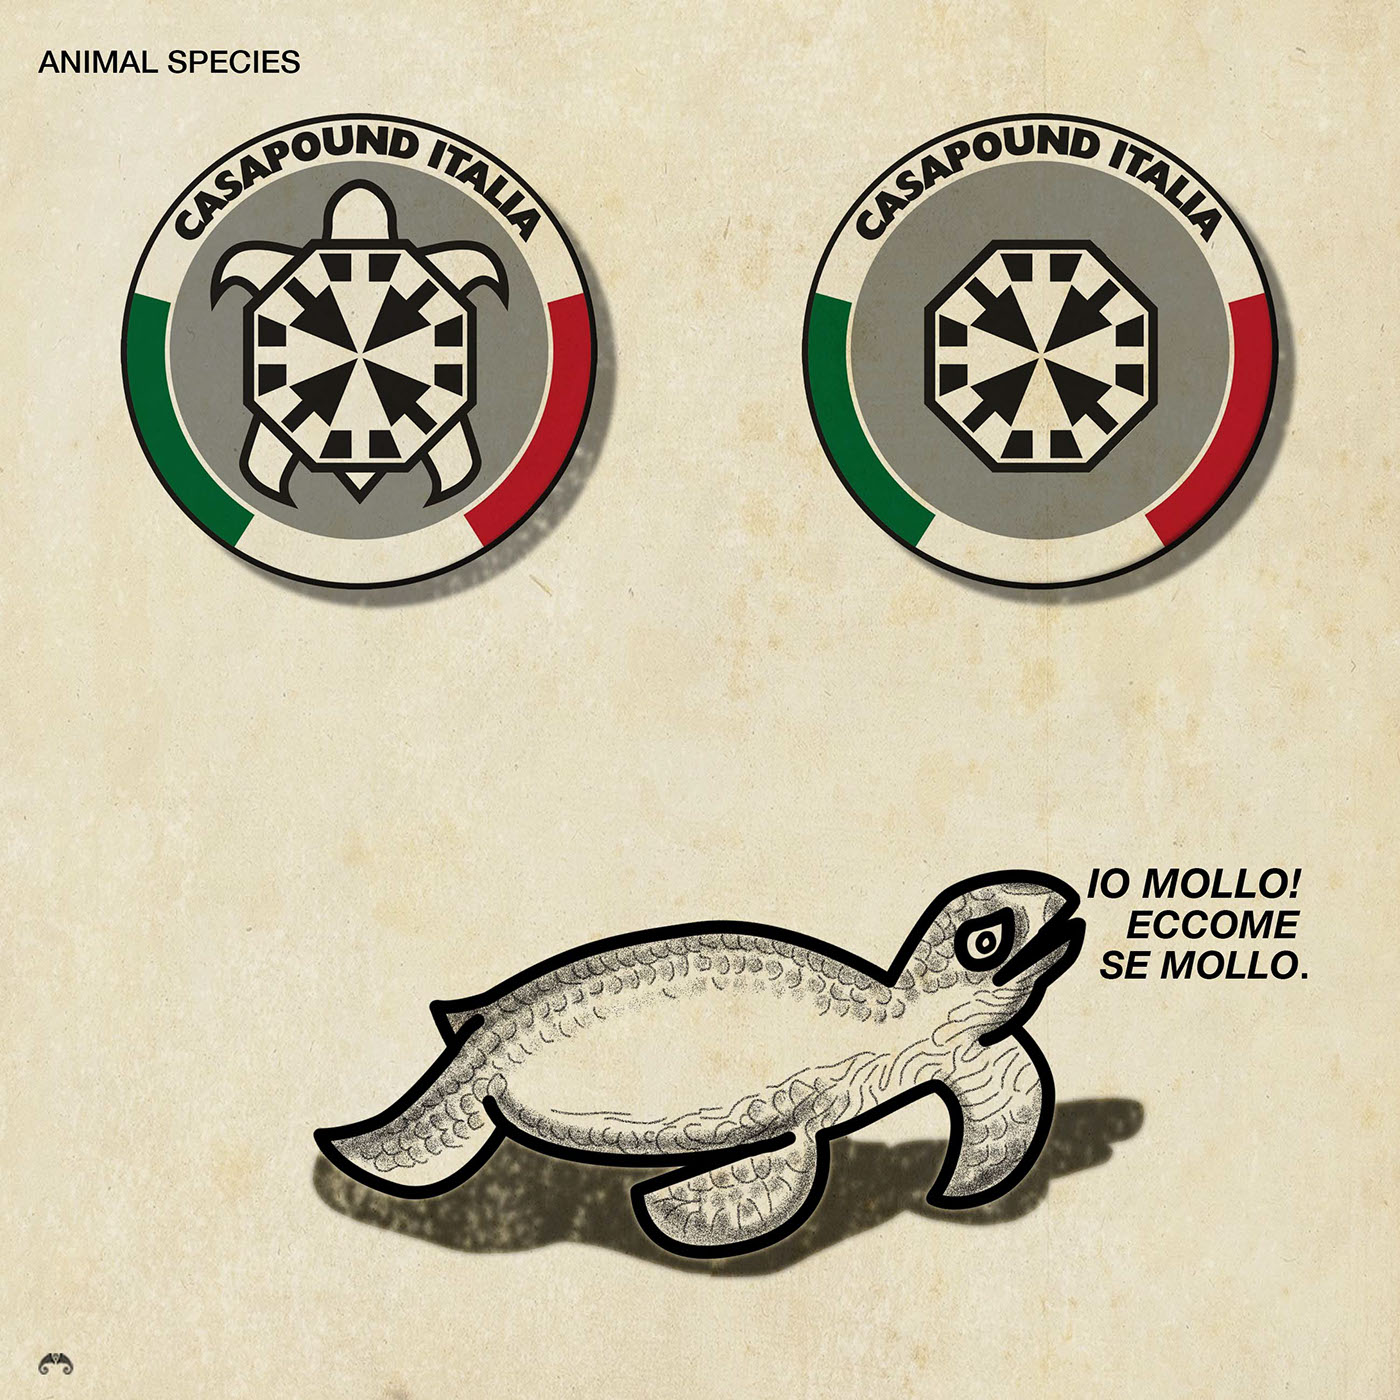 Turtle casapound neofascist party logo ILLUSTRATION  politics political symbol